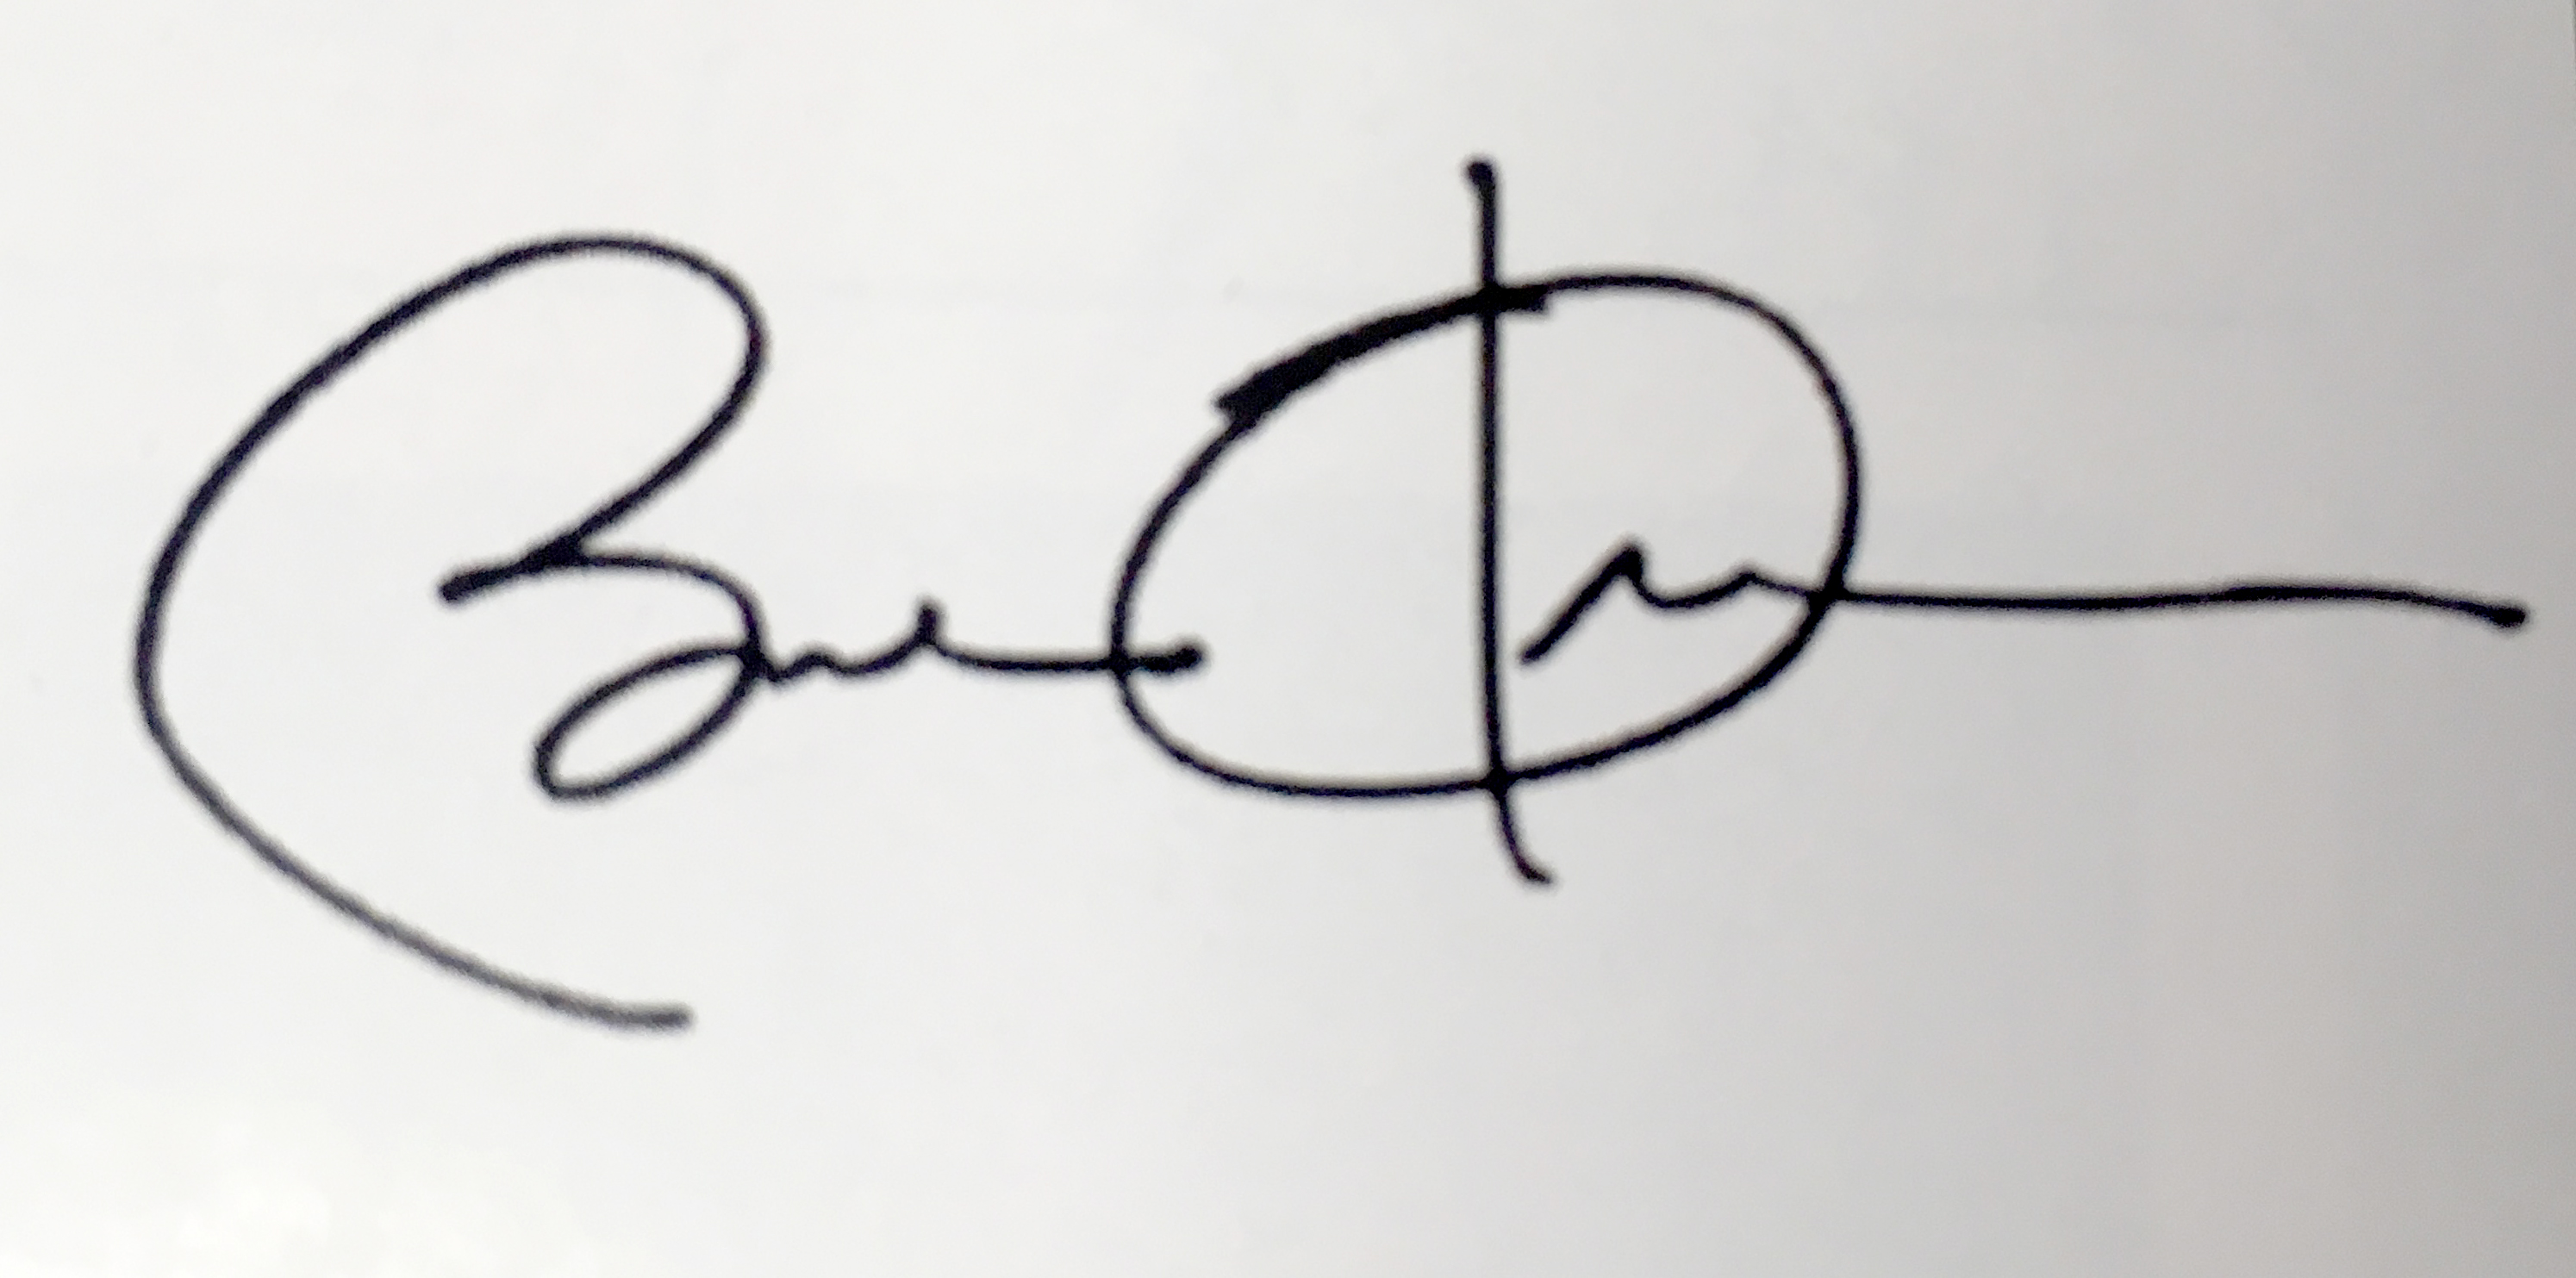 president Barak Obama's signature